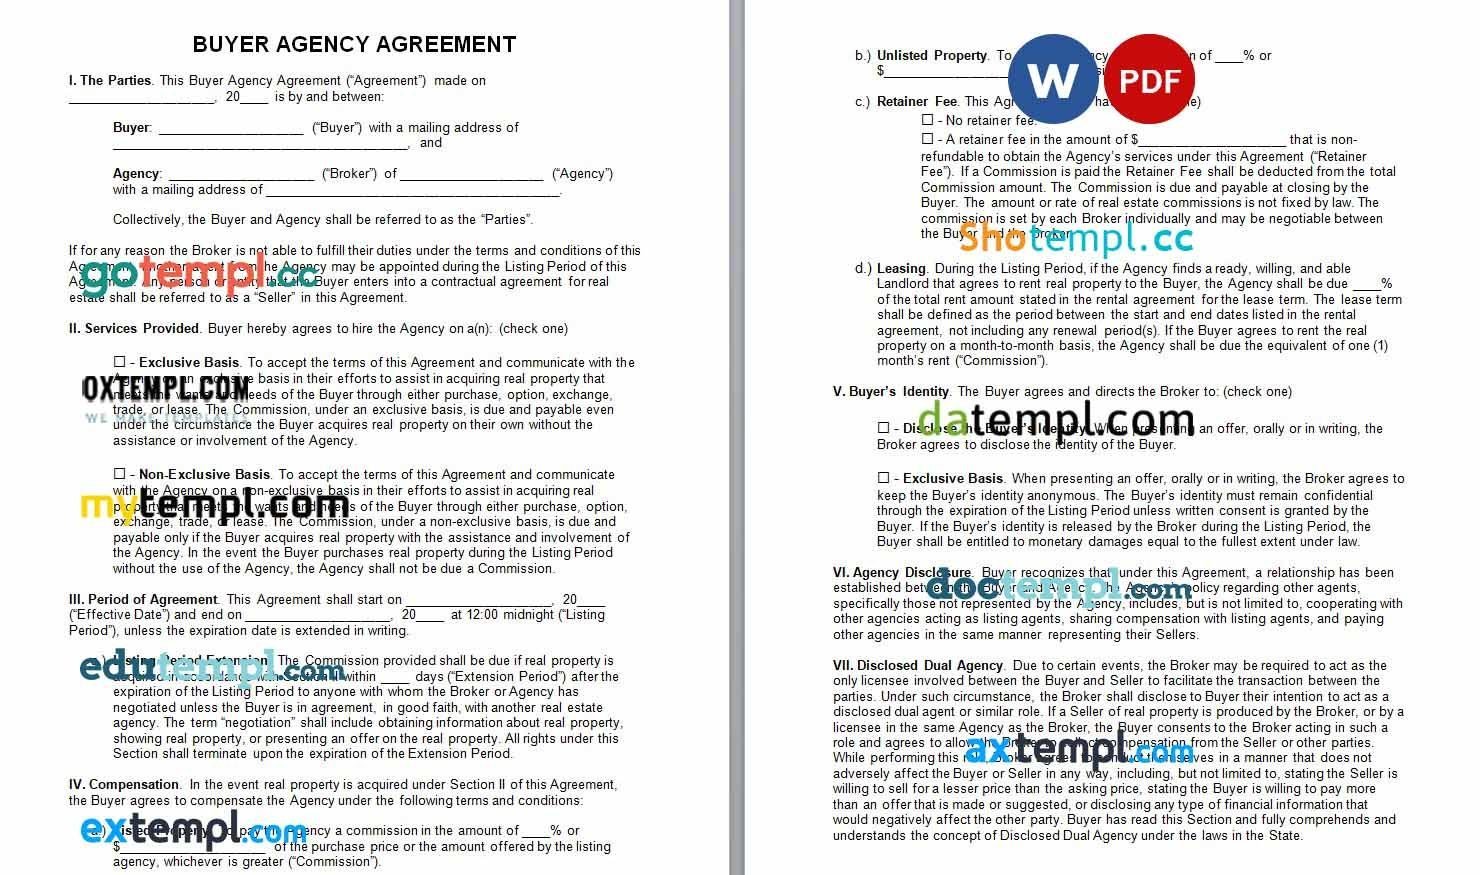 Buyer Agency Agreement Word example, fully editable